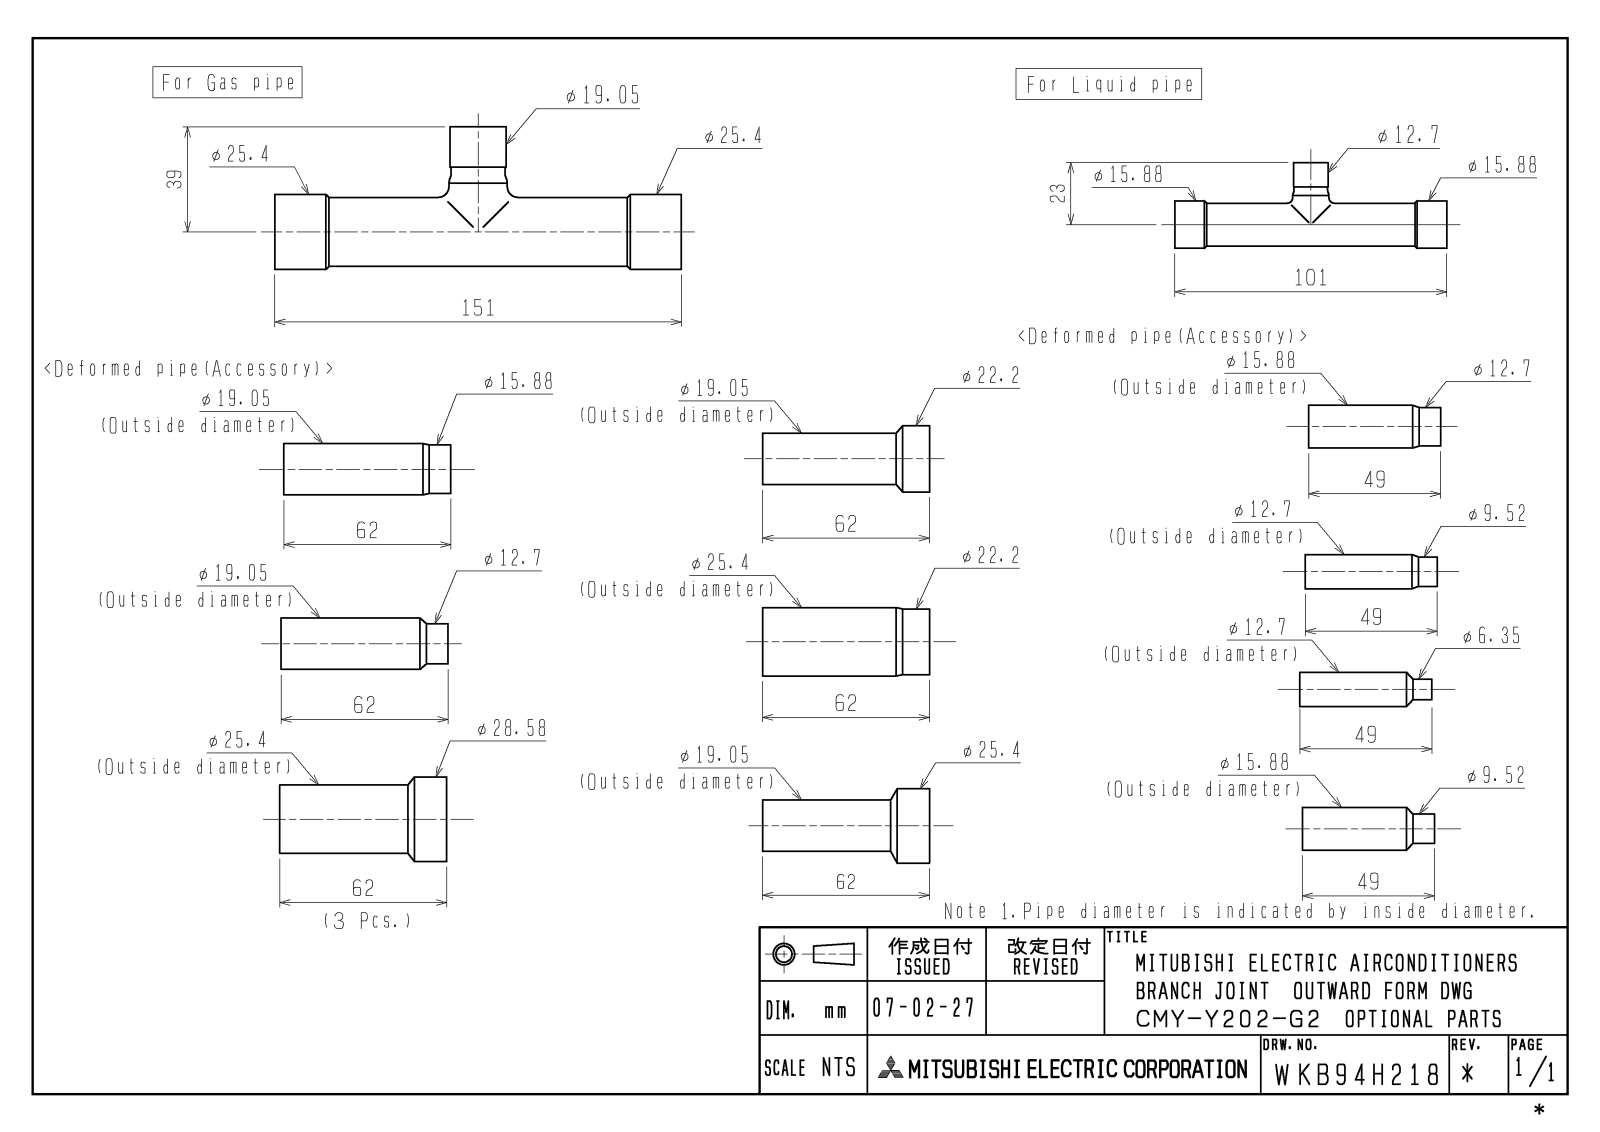 Mitsubishi CMY-Y202-G2 PartsList